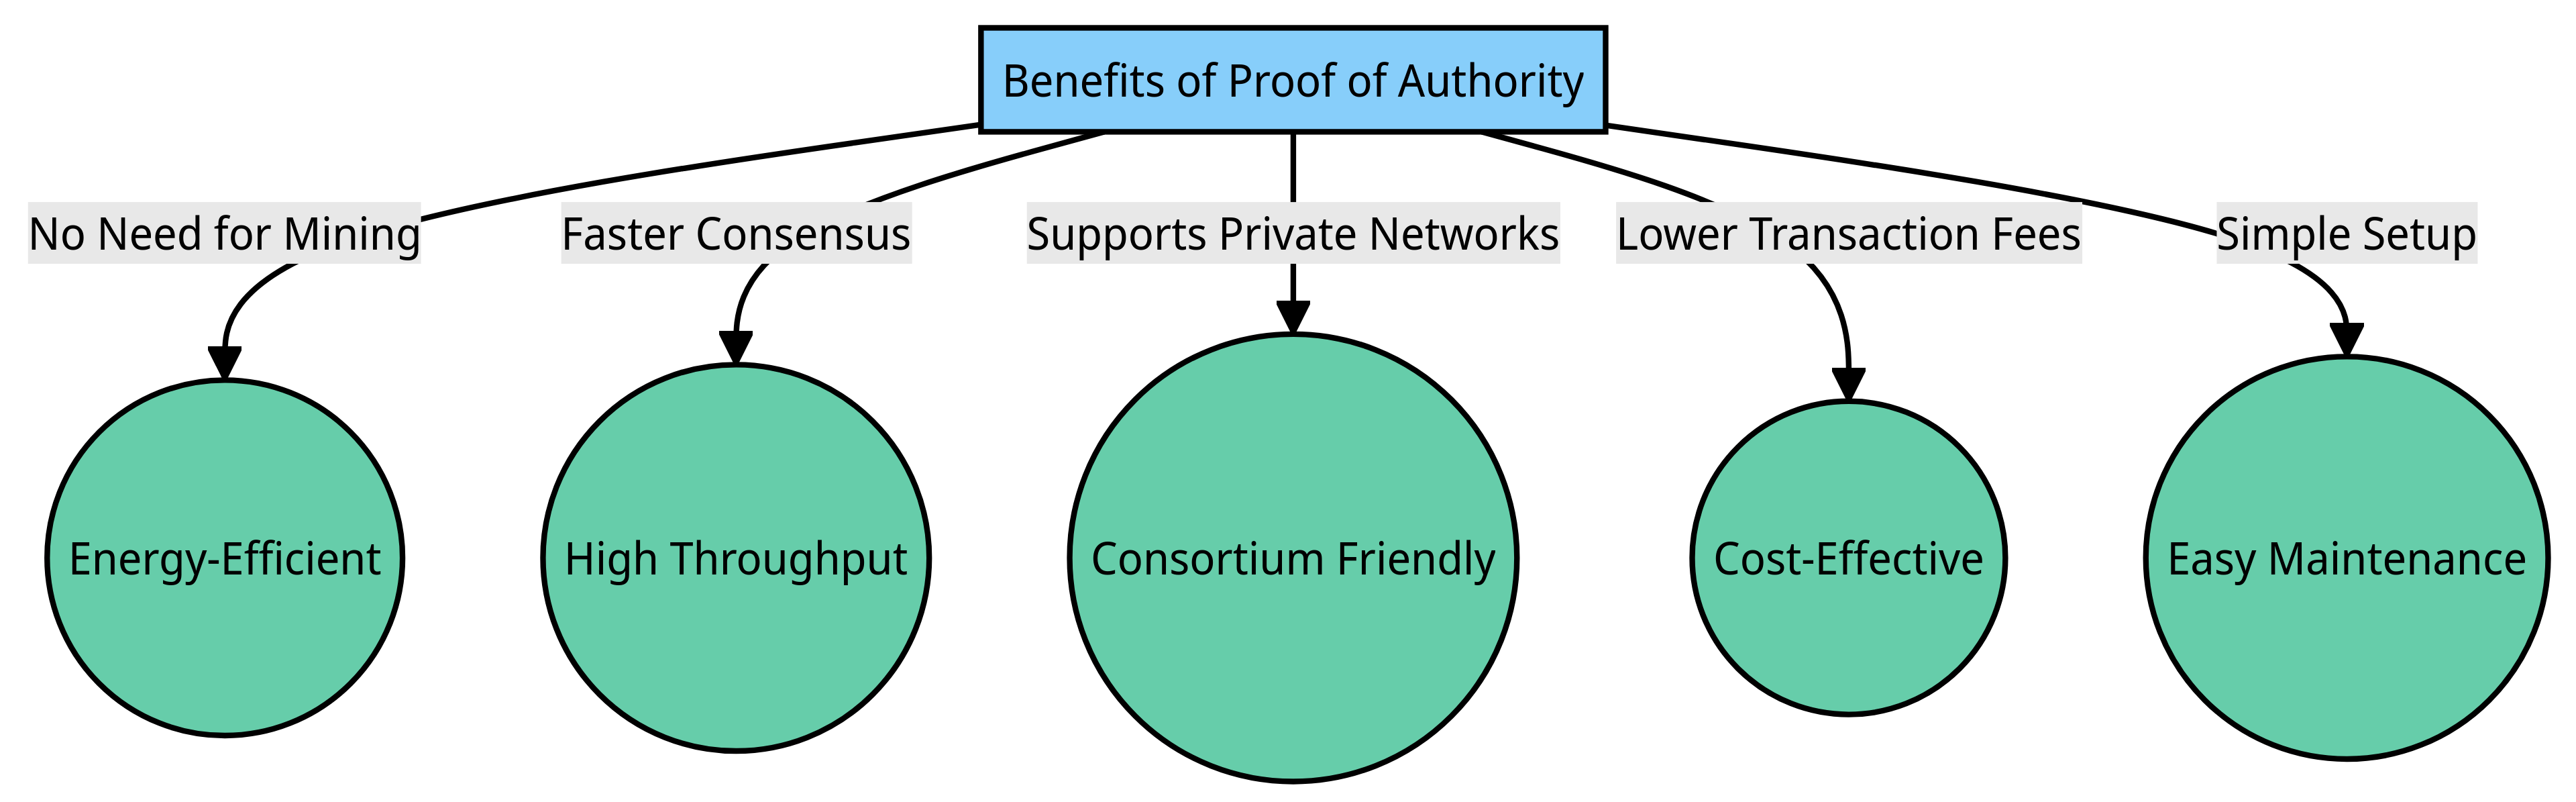 Benefits of Proof of Authority